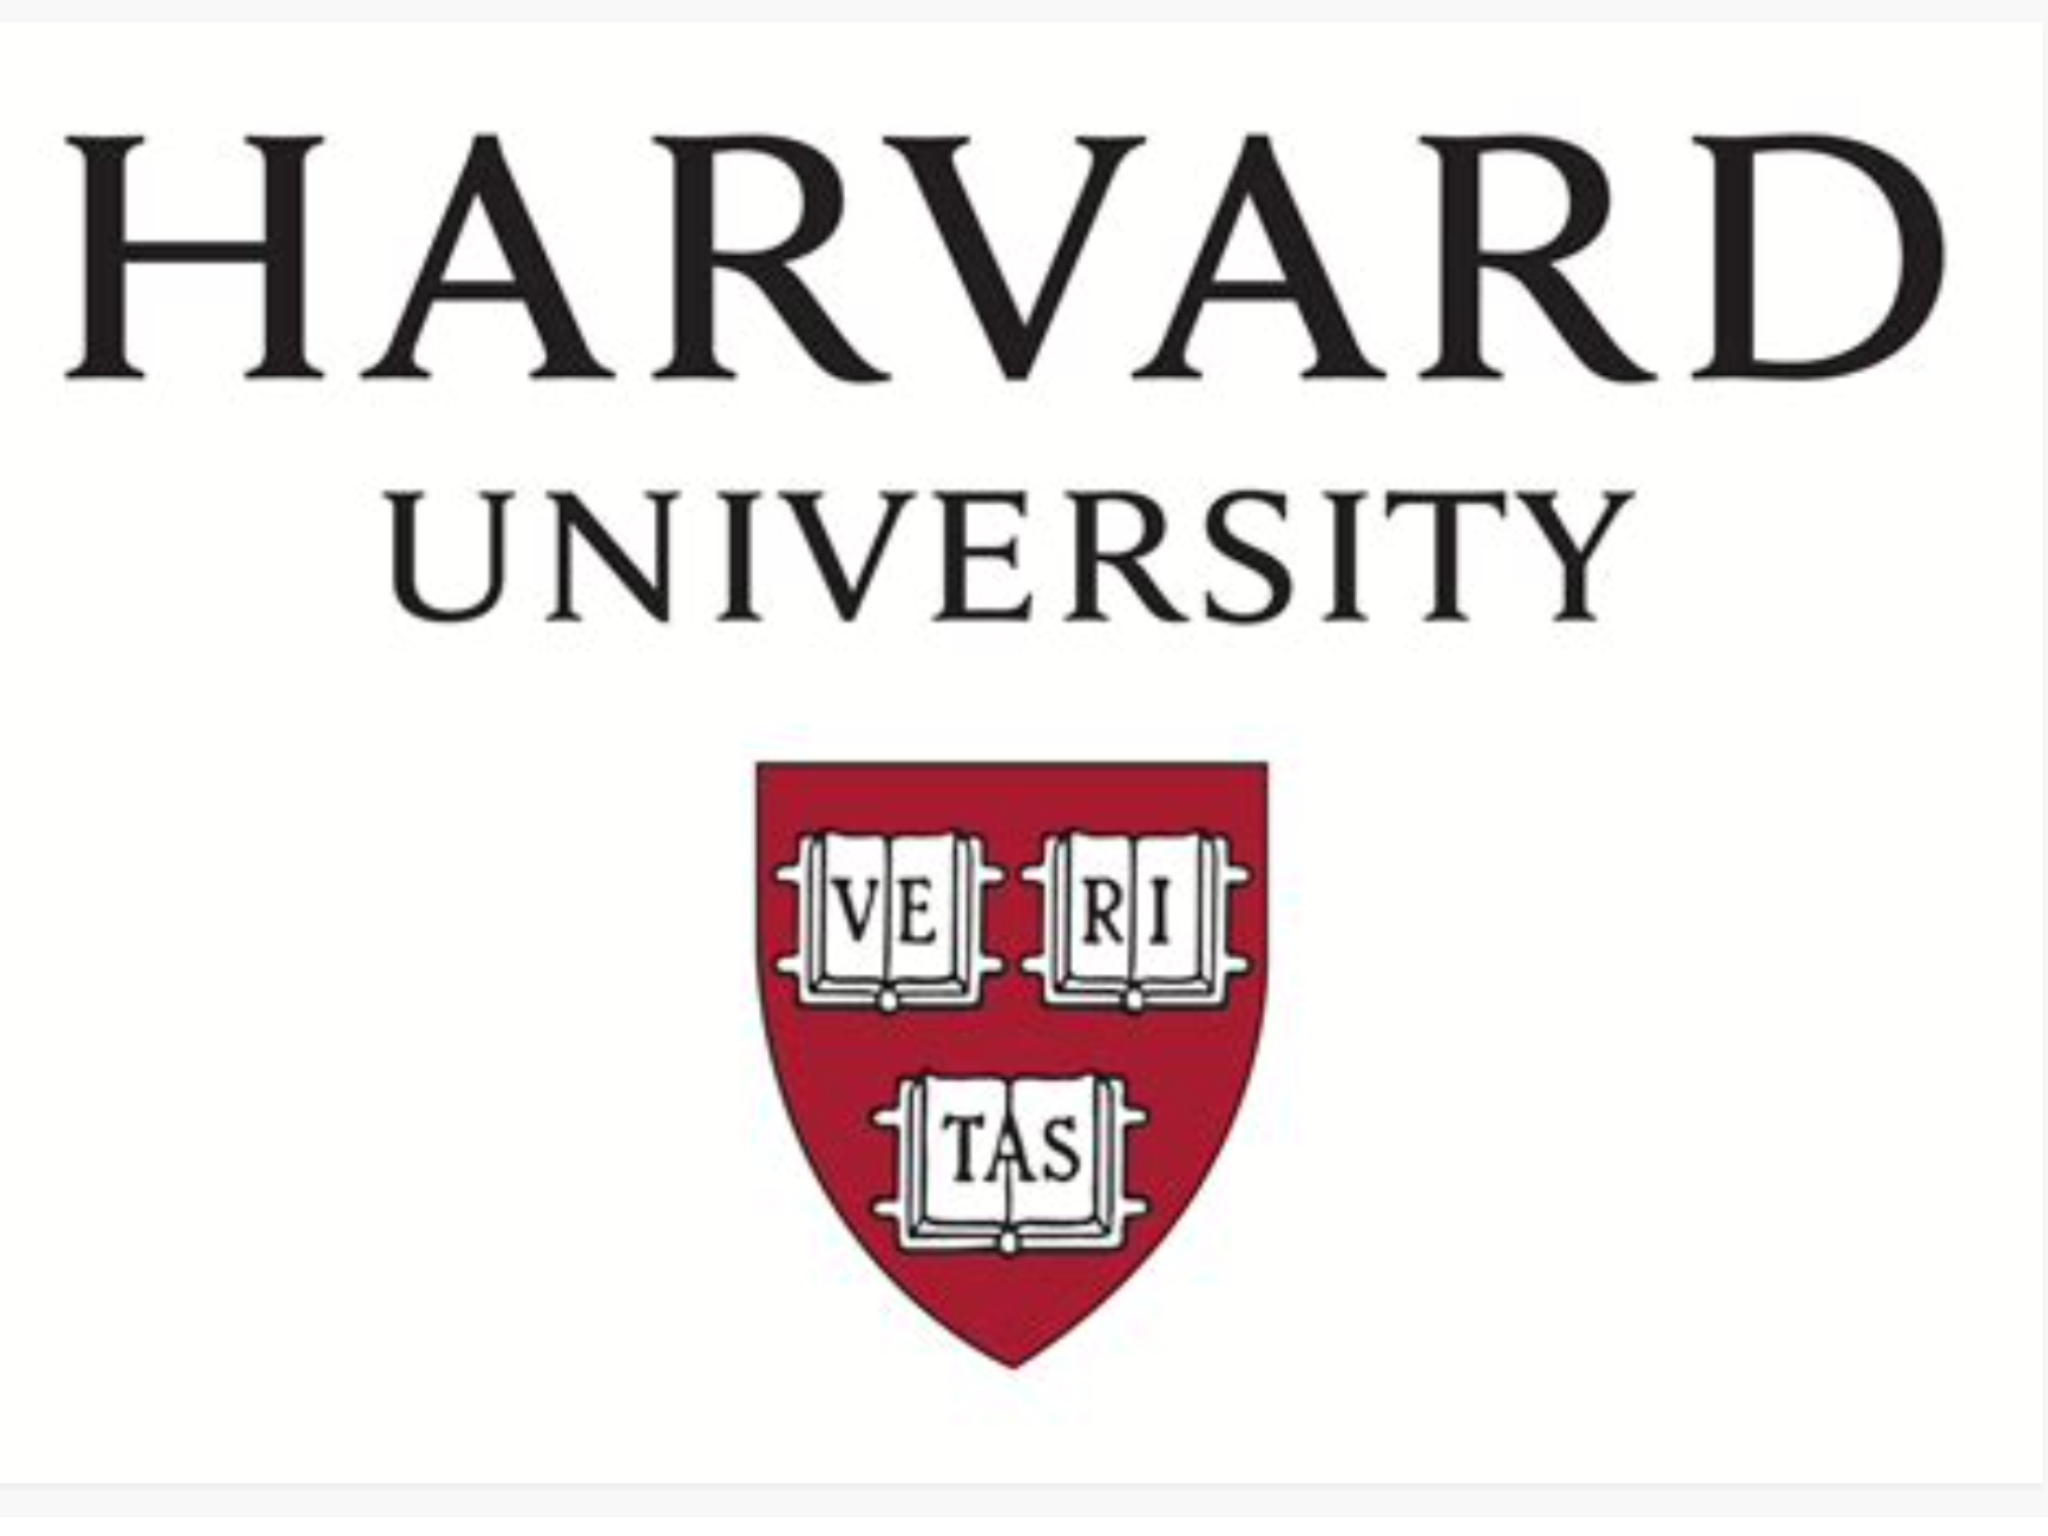 Go Harvard